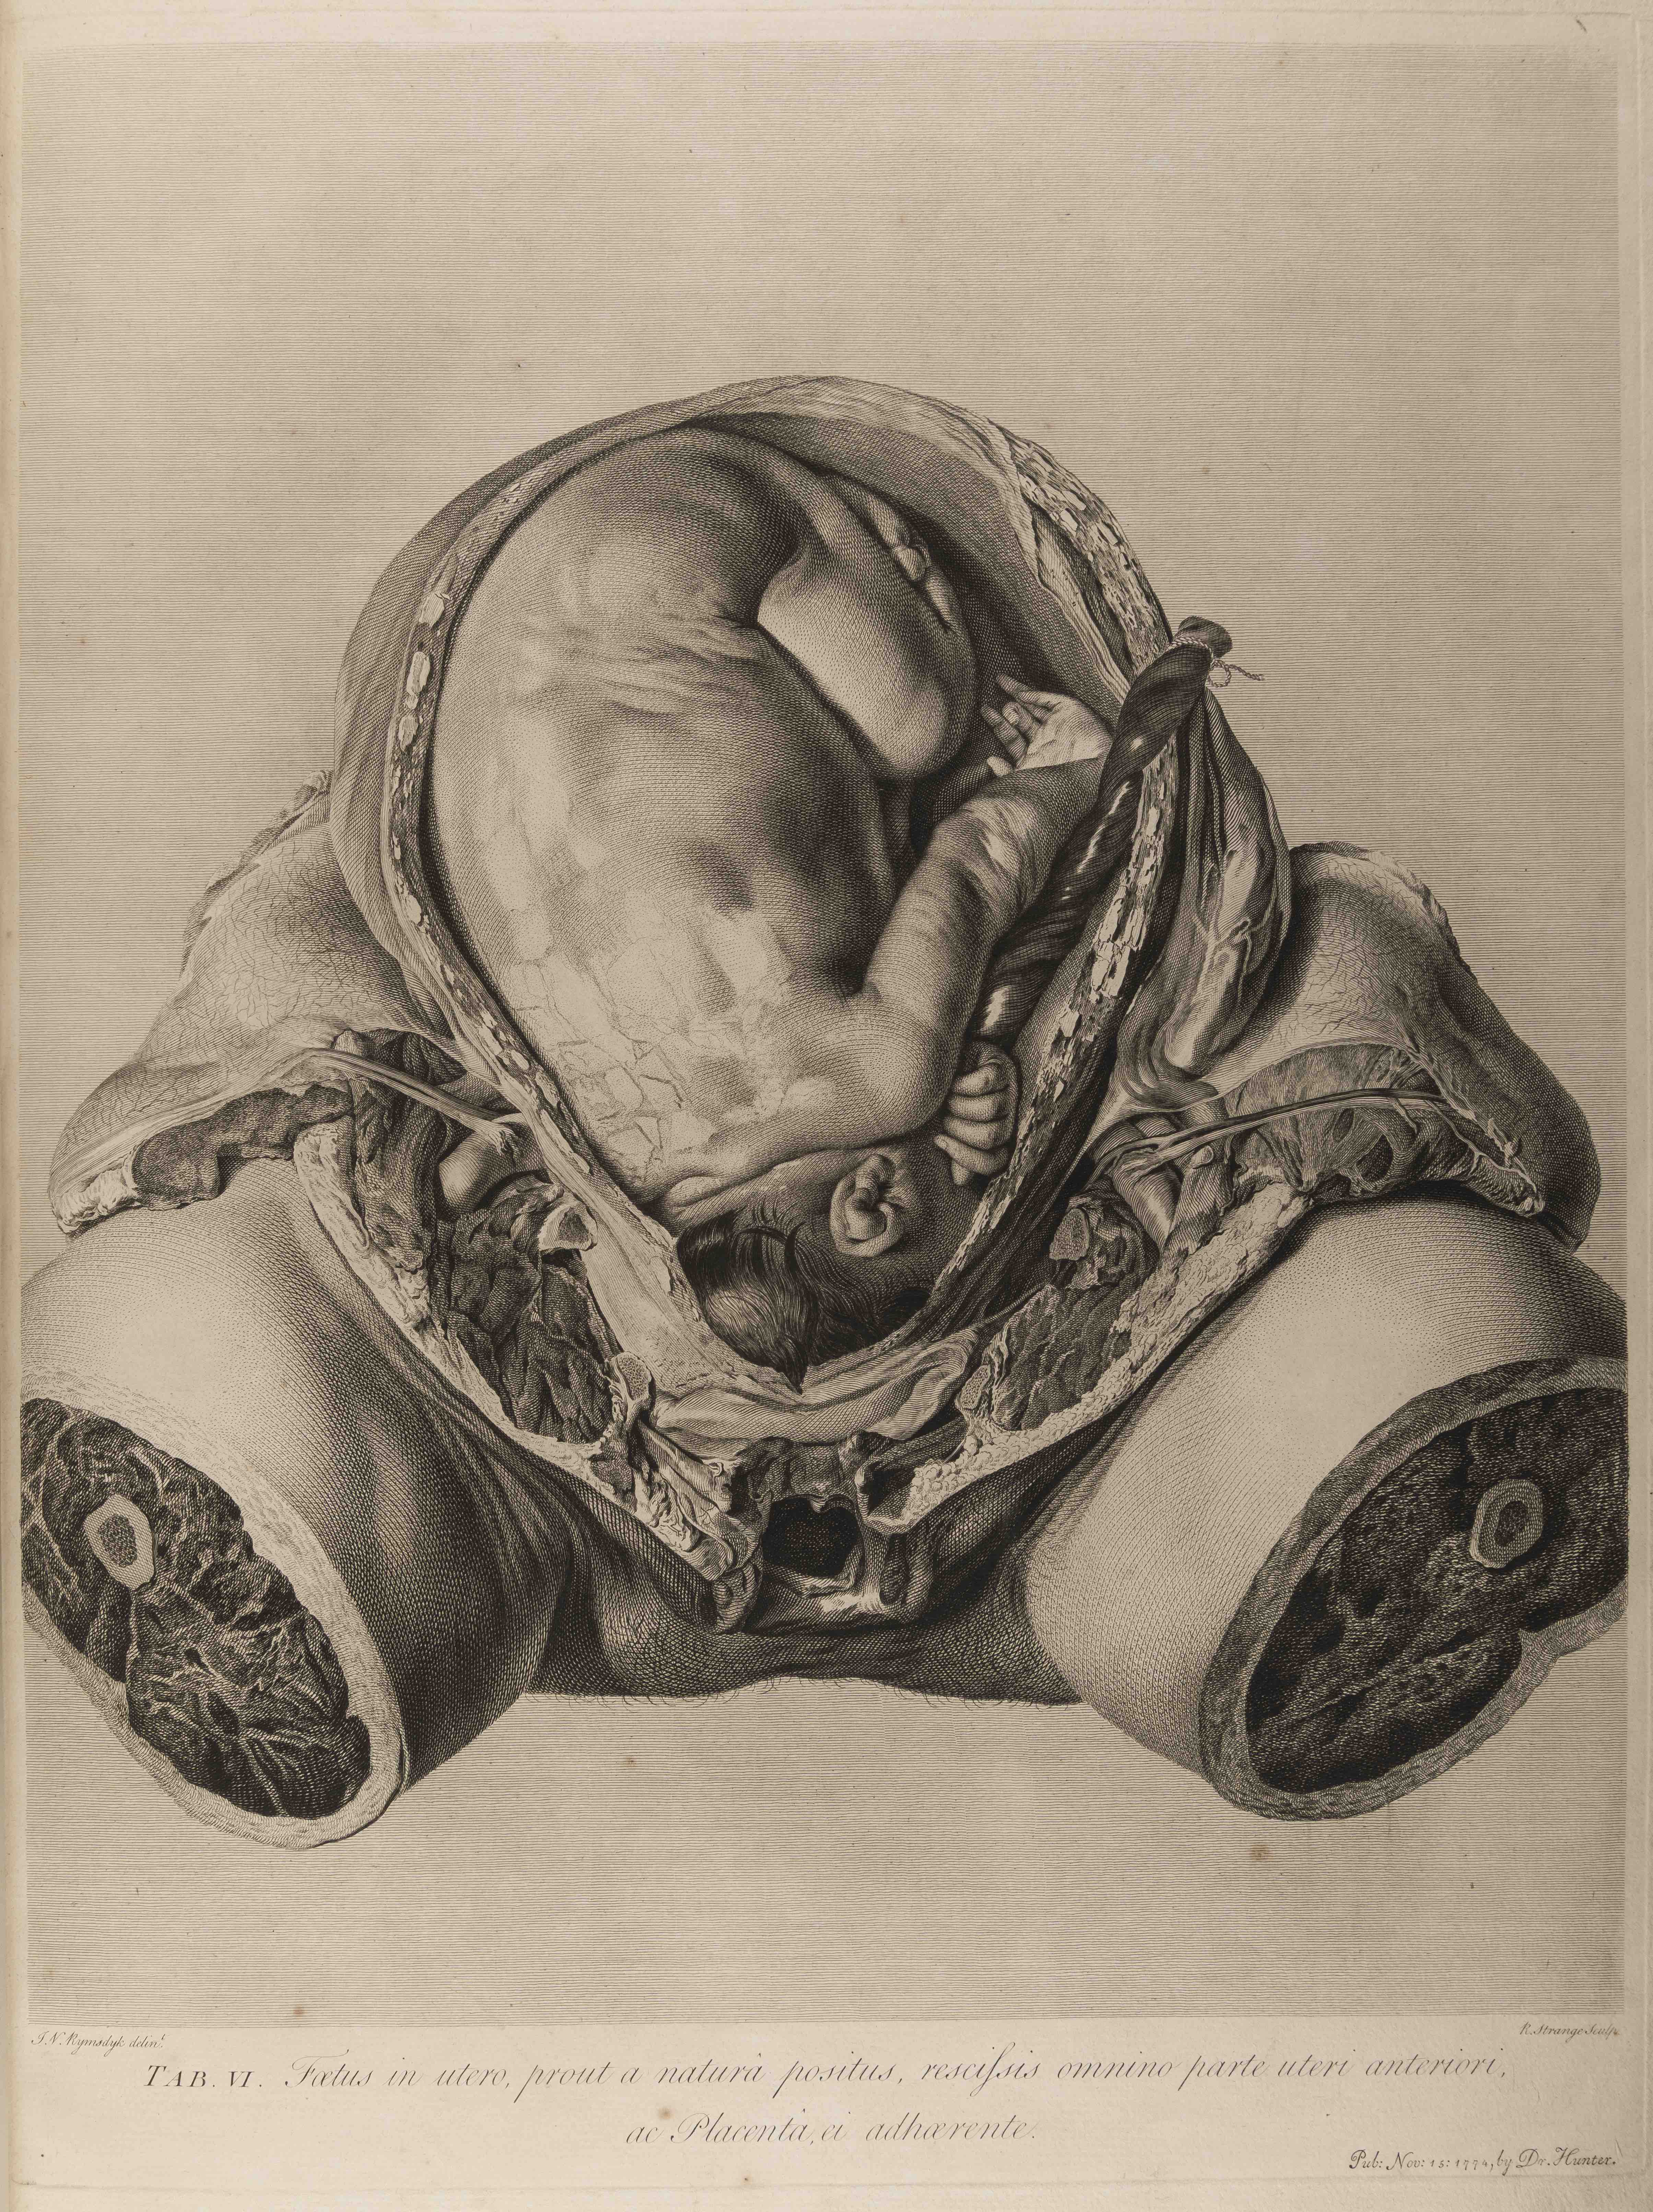 "Table 6 of William Hunter, Anatomia Uteri Humani Gravidi Tabulis Illustrata (Birmingham: John Baskerville, 1774), University of St Andrews Library, rfx QM421.H8."